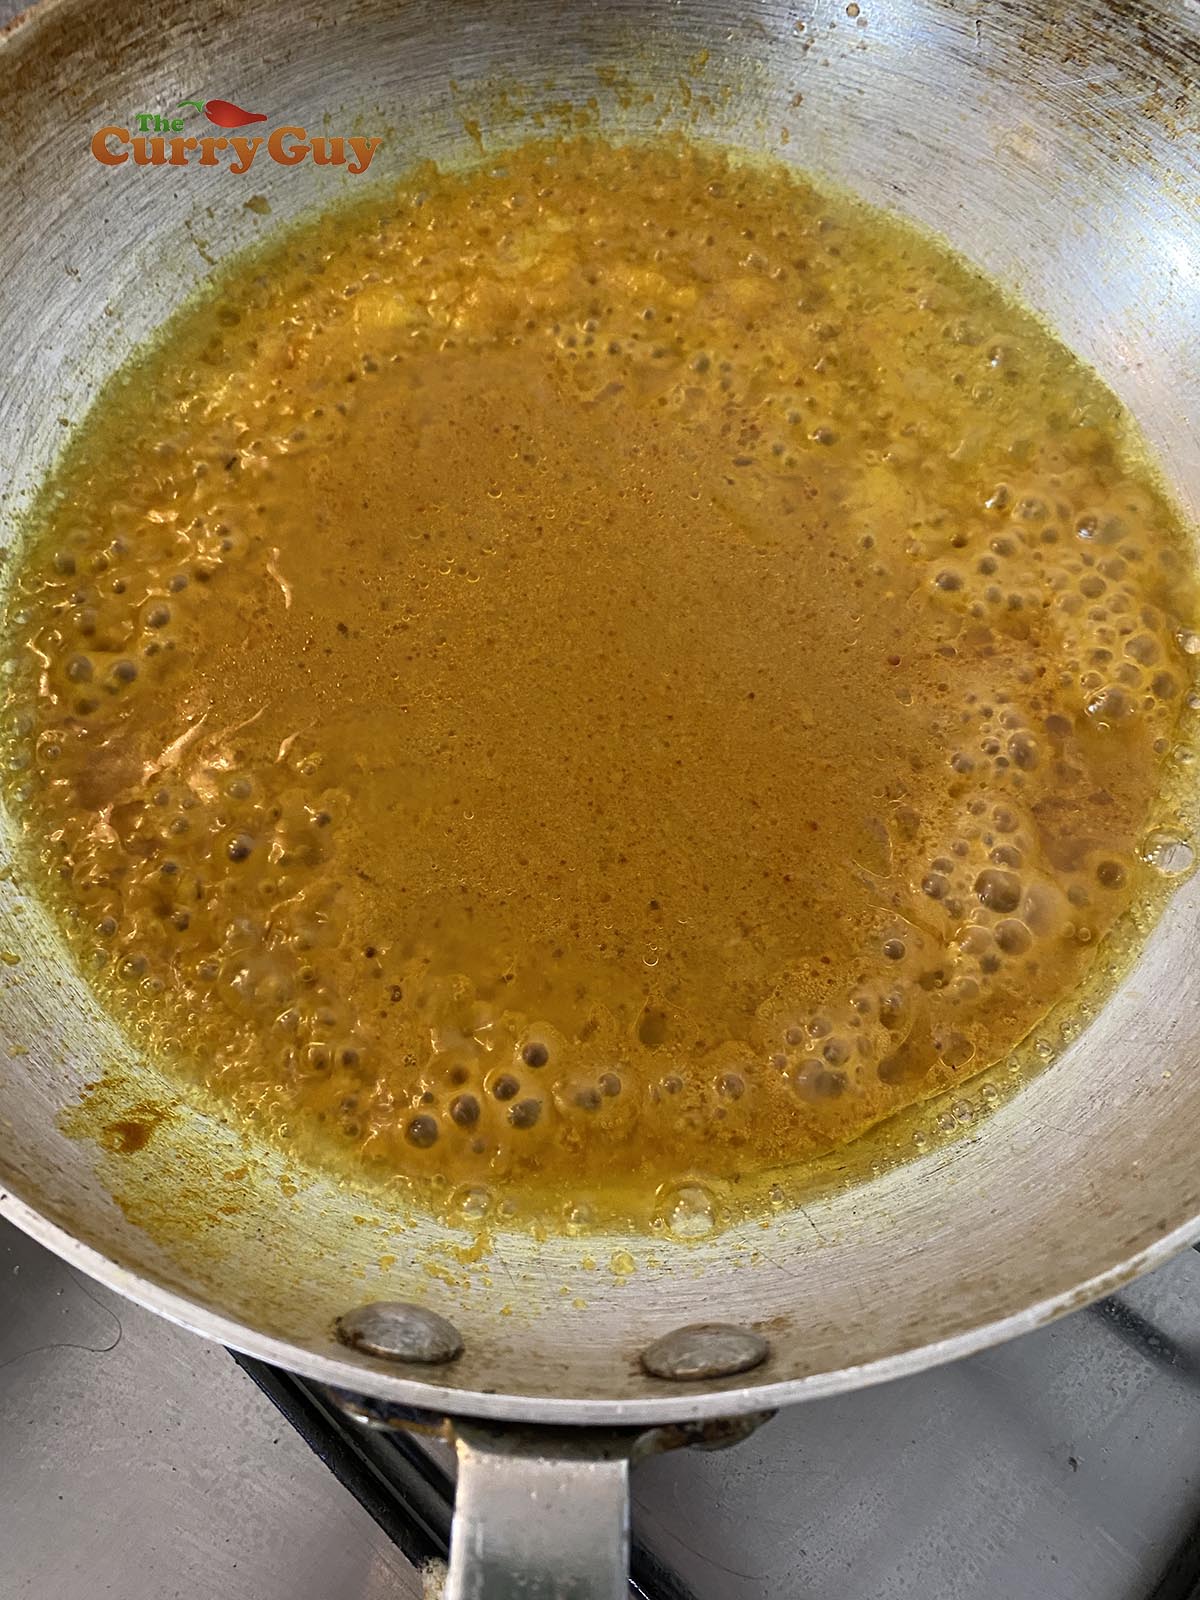 Adding base sauce to the pan